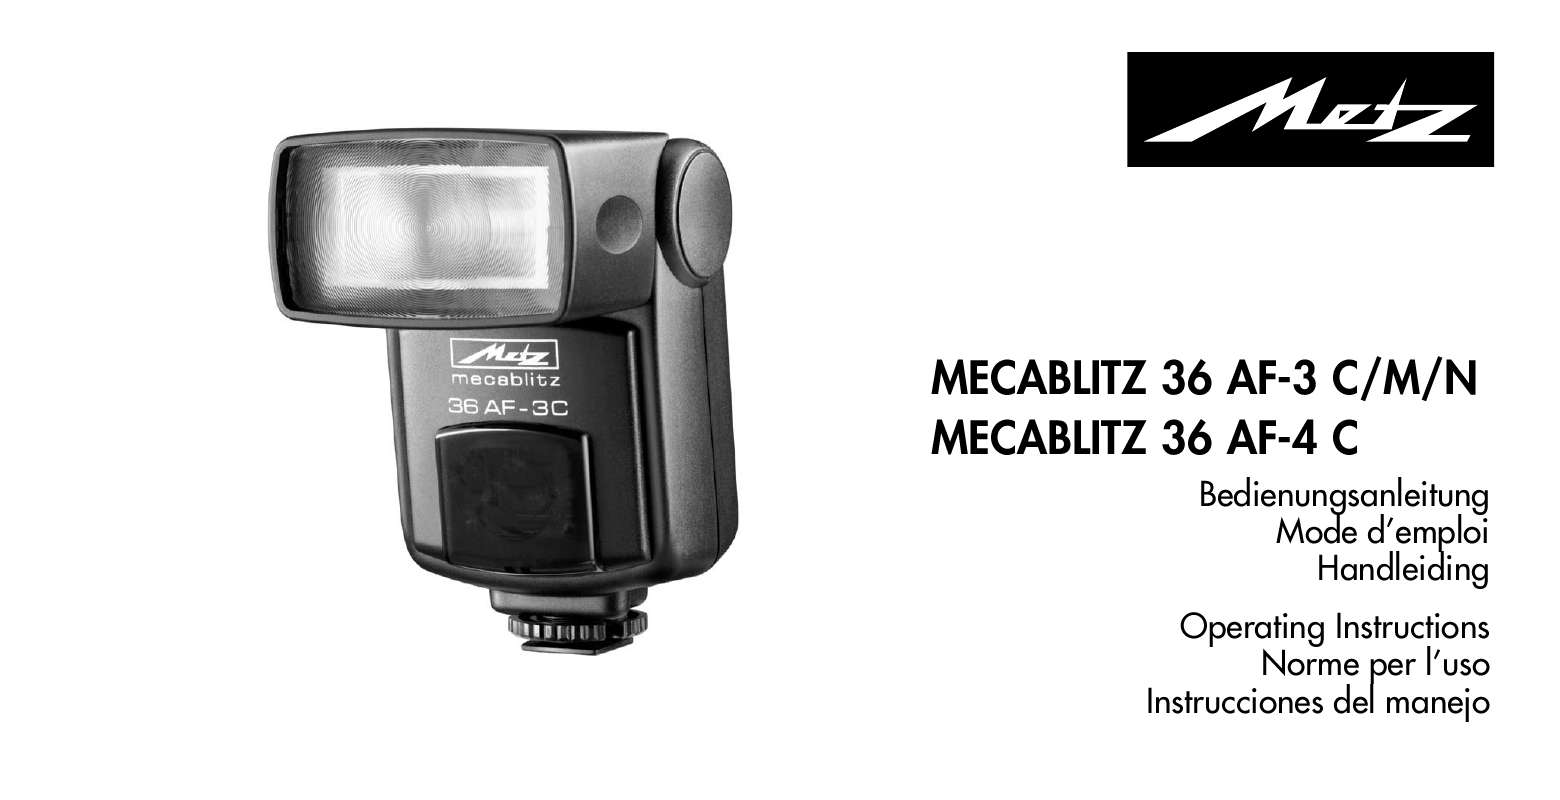 Guide utilisation  METZ MECABLITZ 36 AF-3 N  de la marque METZ